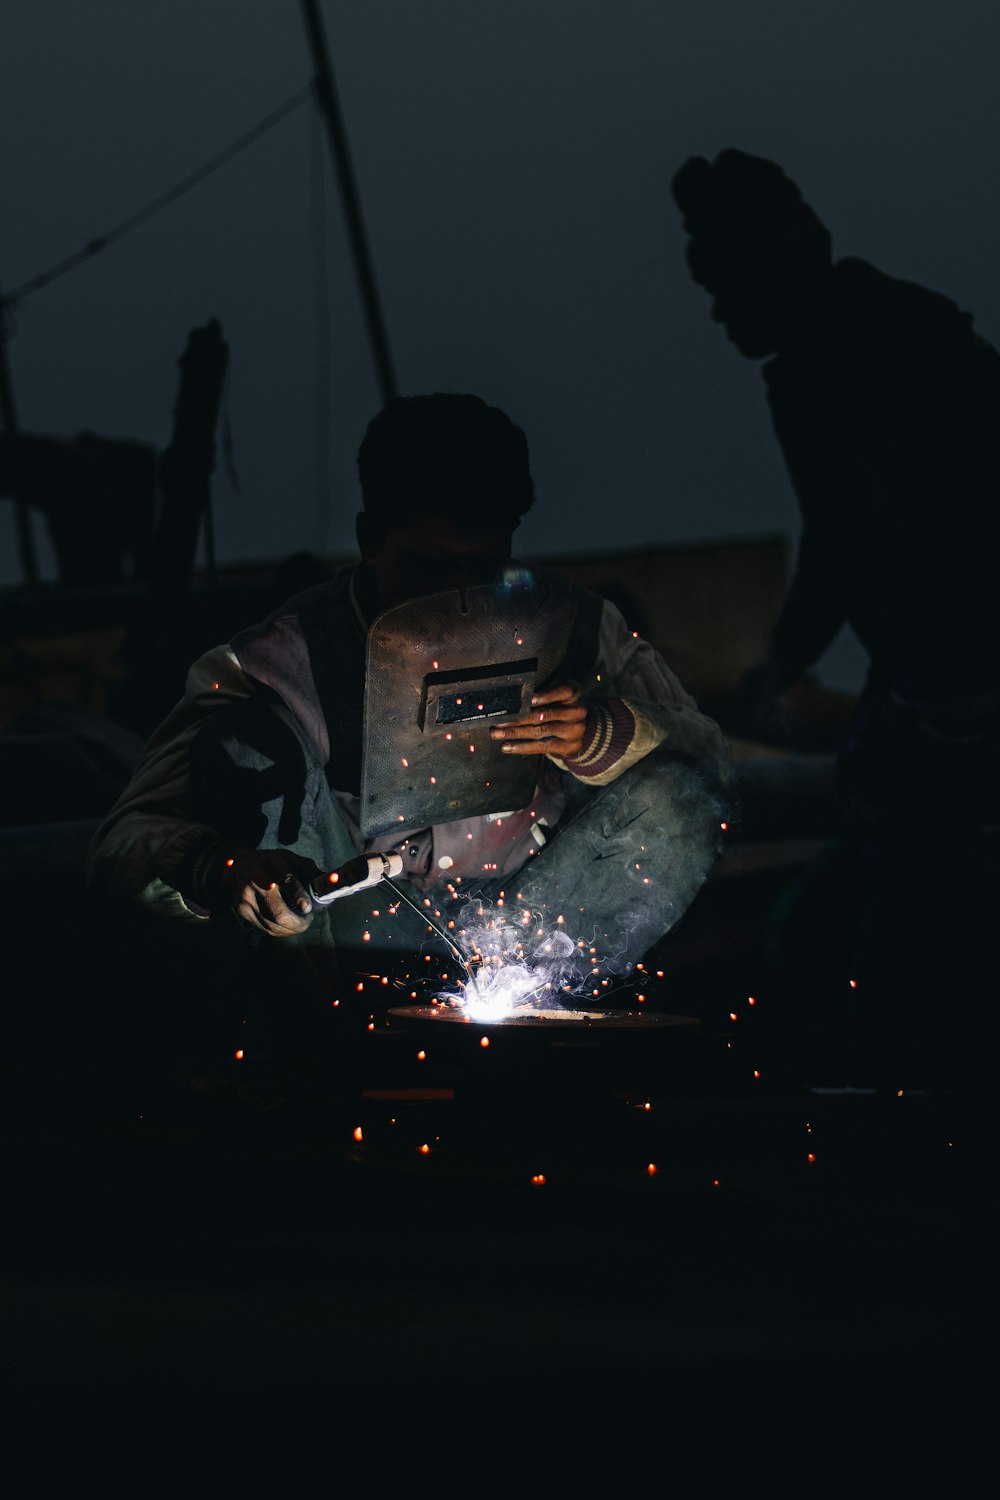 welders working on a piece of metal in the dark